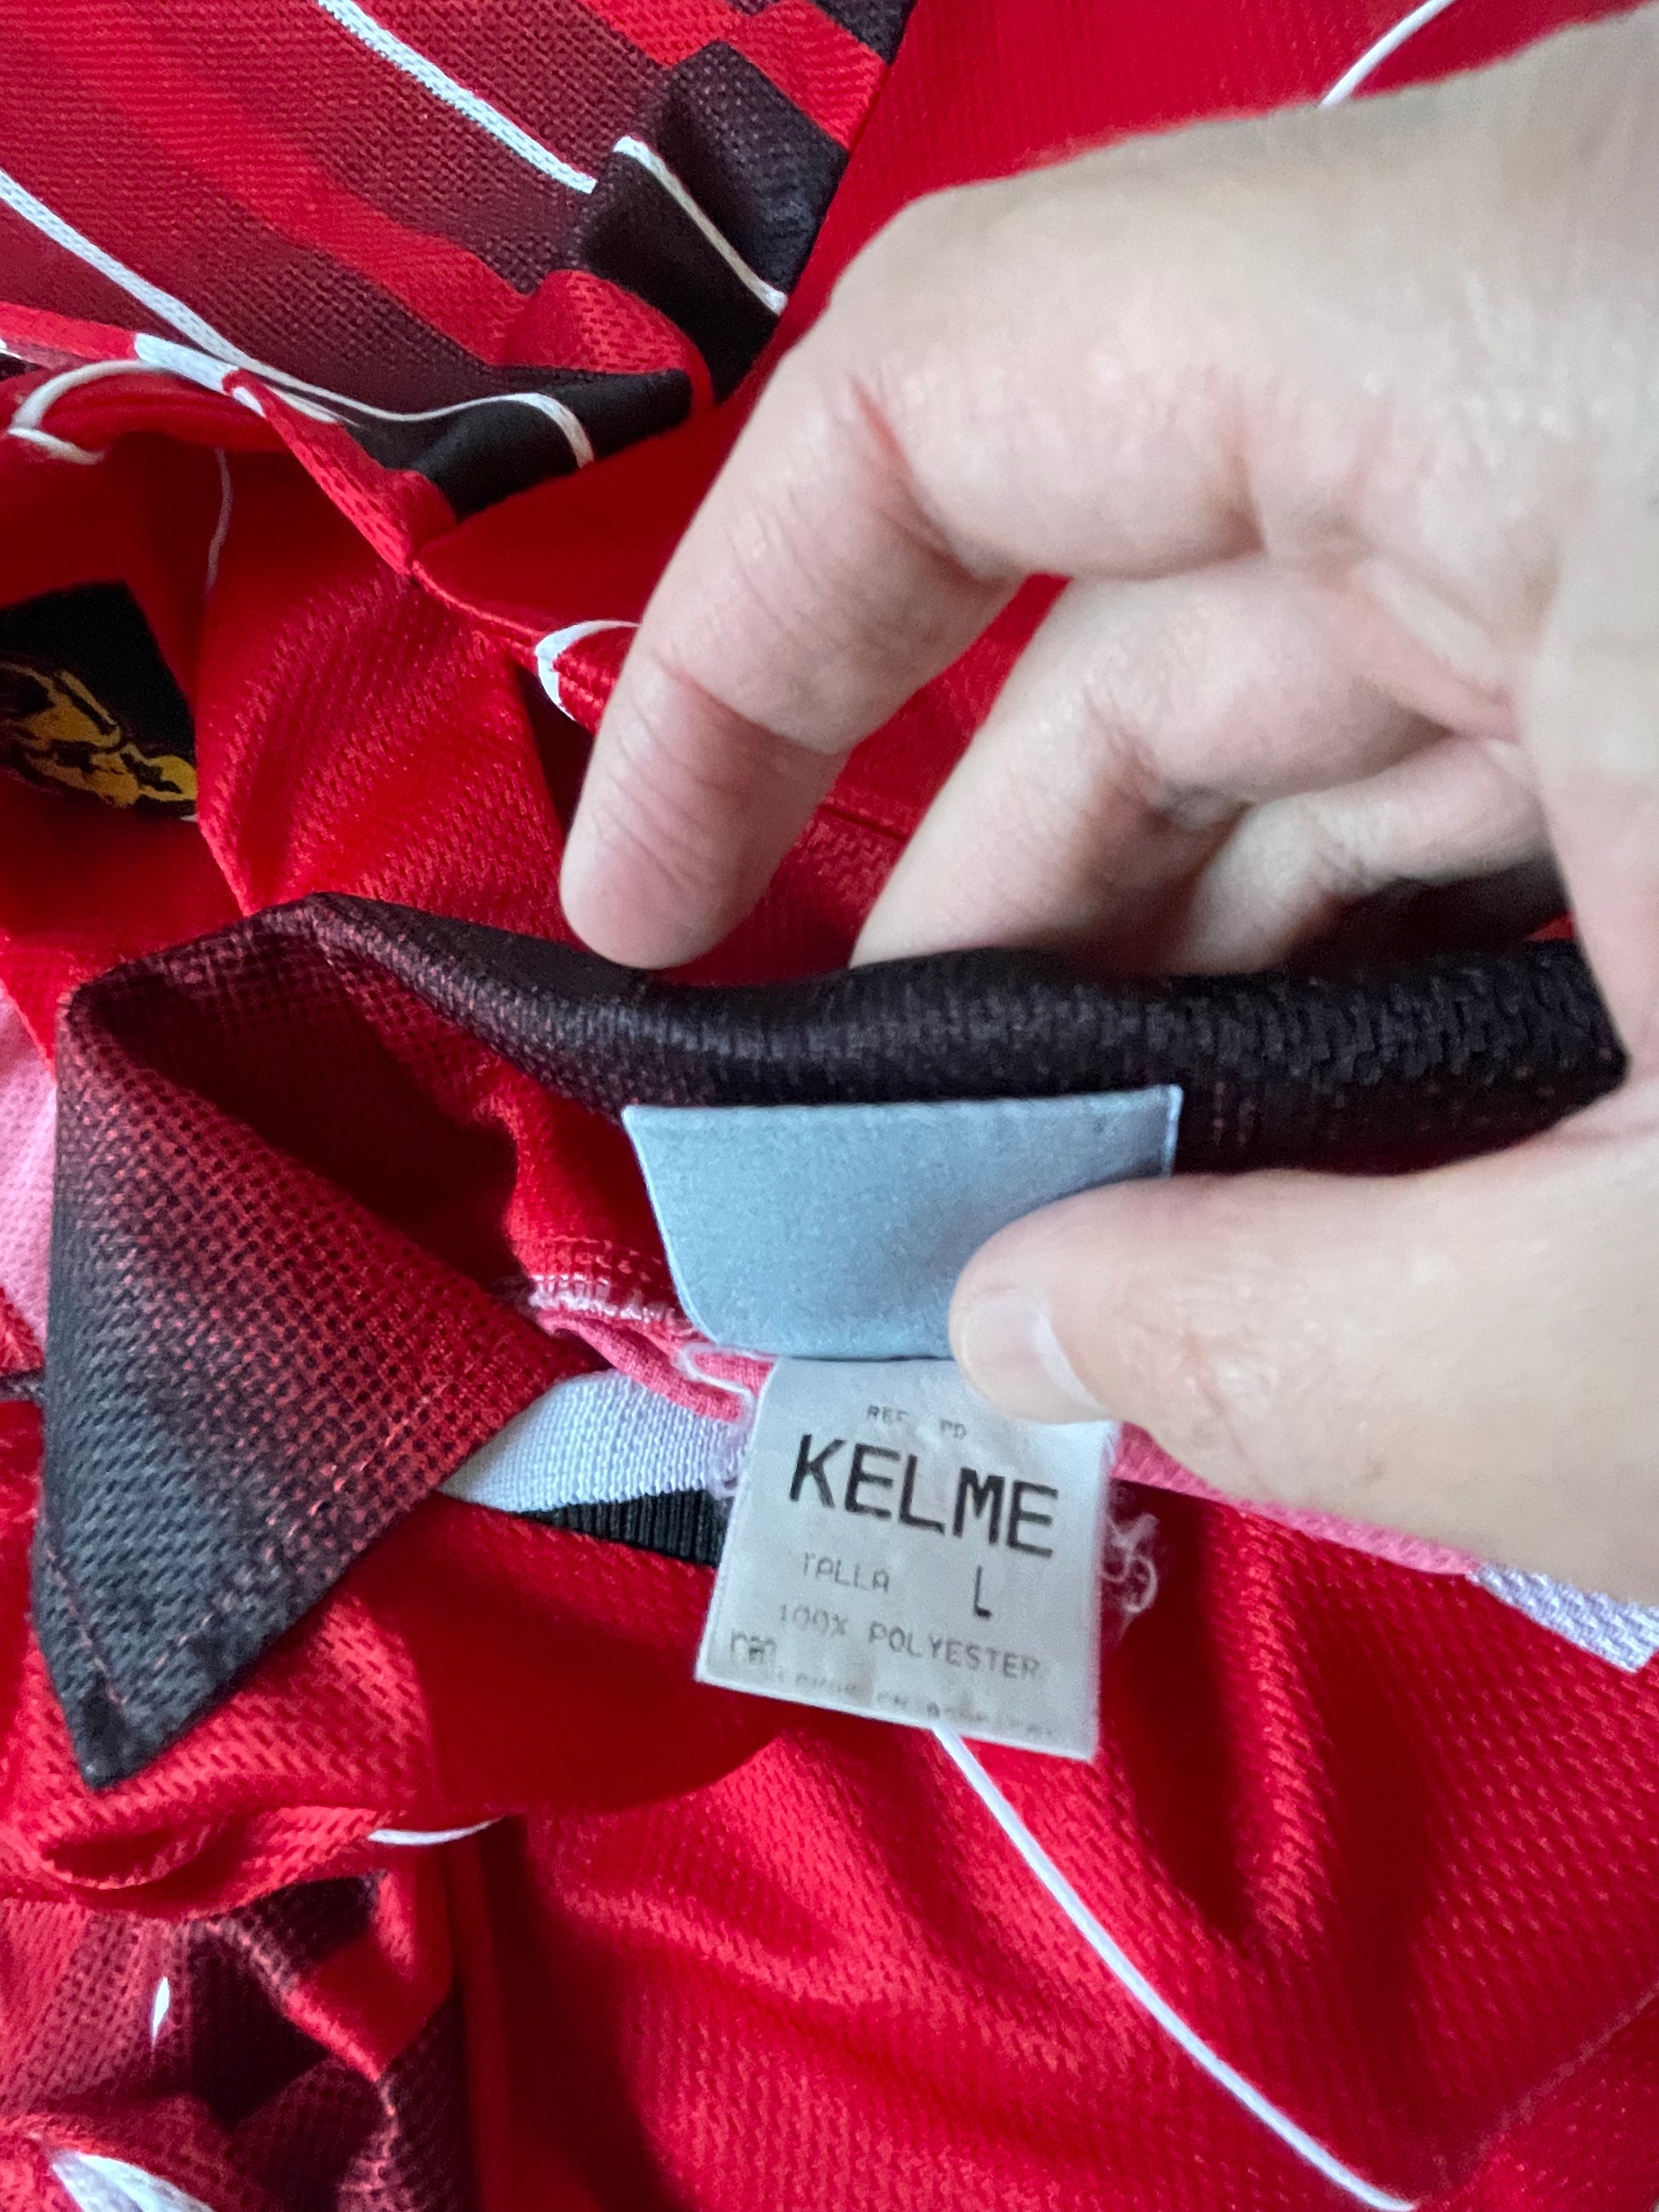 RCD Mallorca Kelme 1997 - 1999 Home Football Shirt Spanner Red Size L Made in Spain